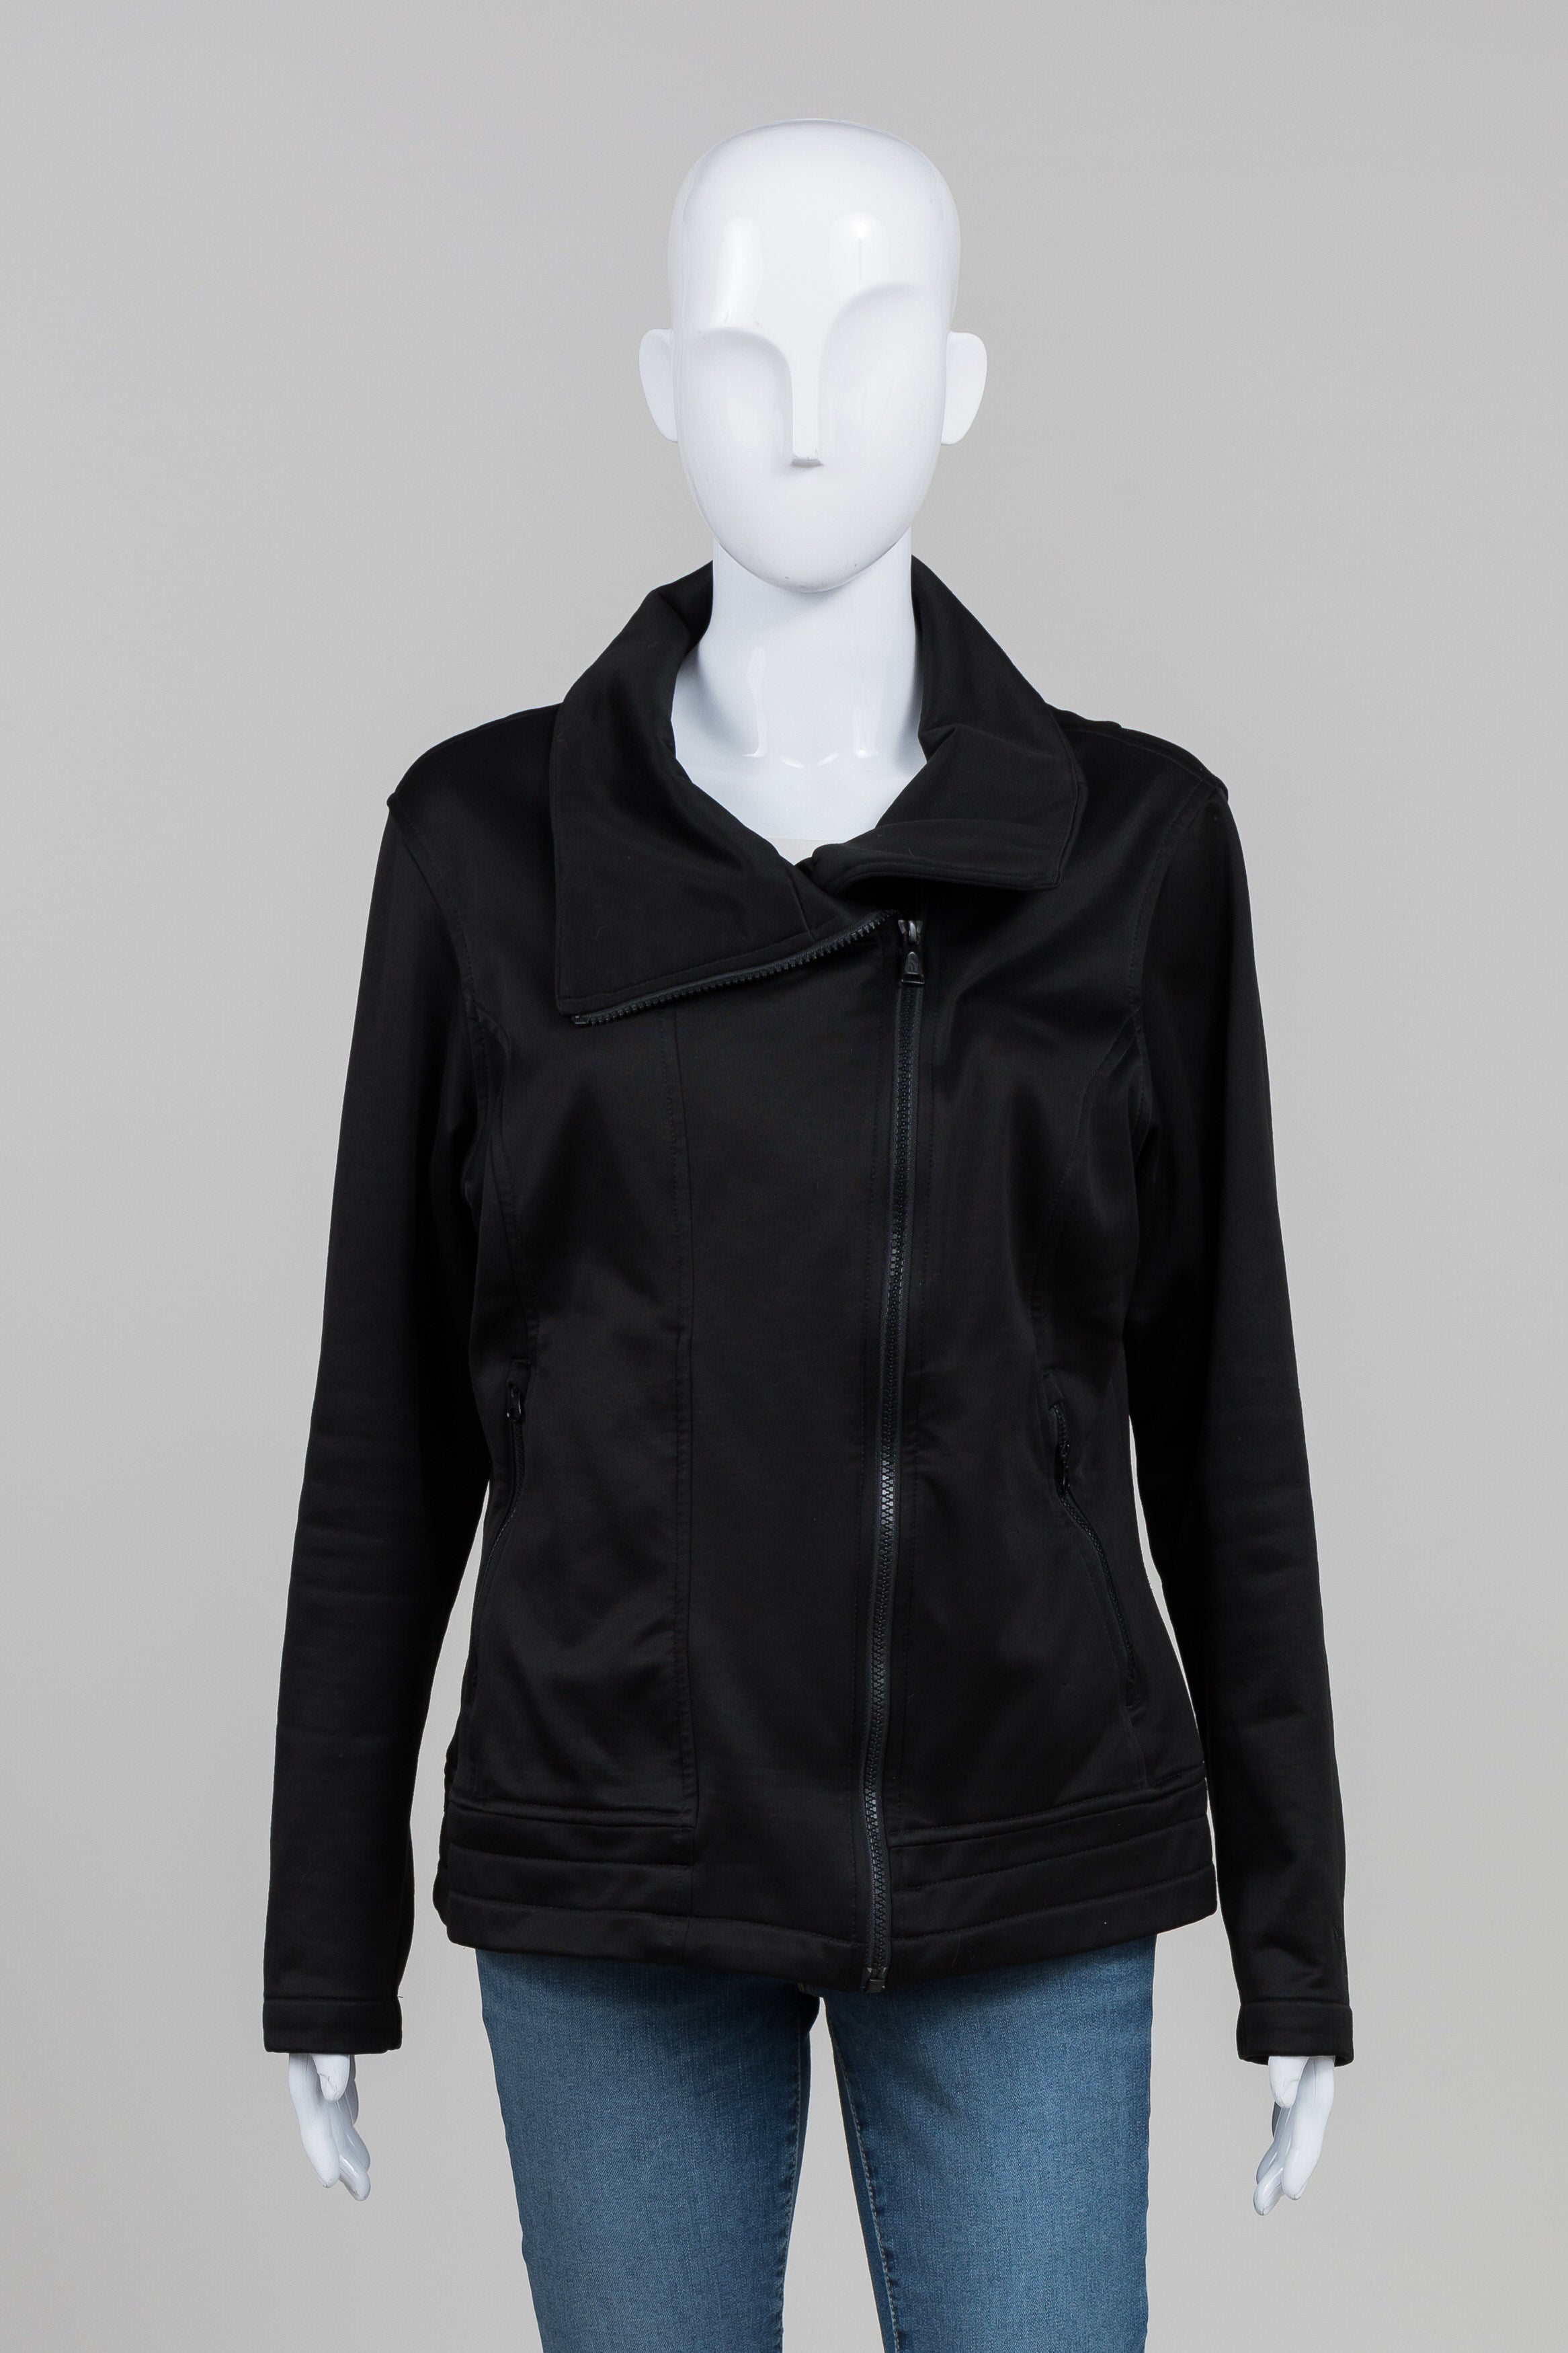 North Face Black Side Zip Active Jacket (XL)